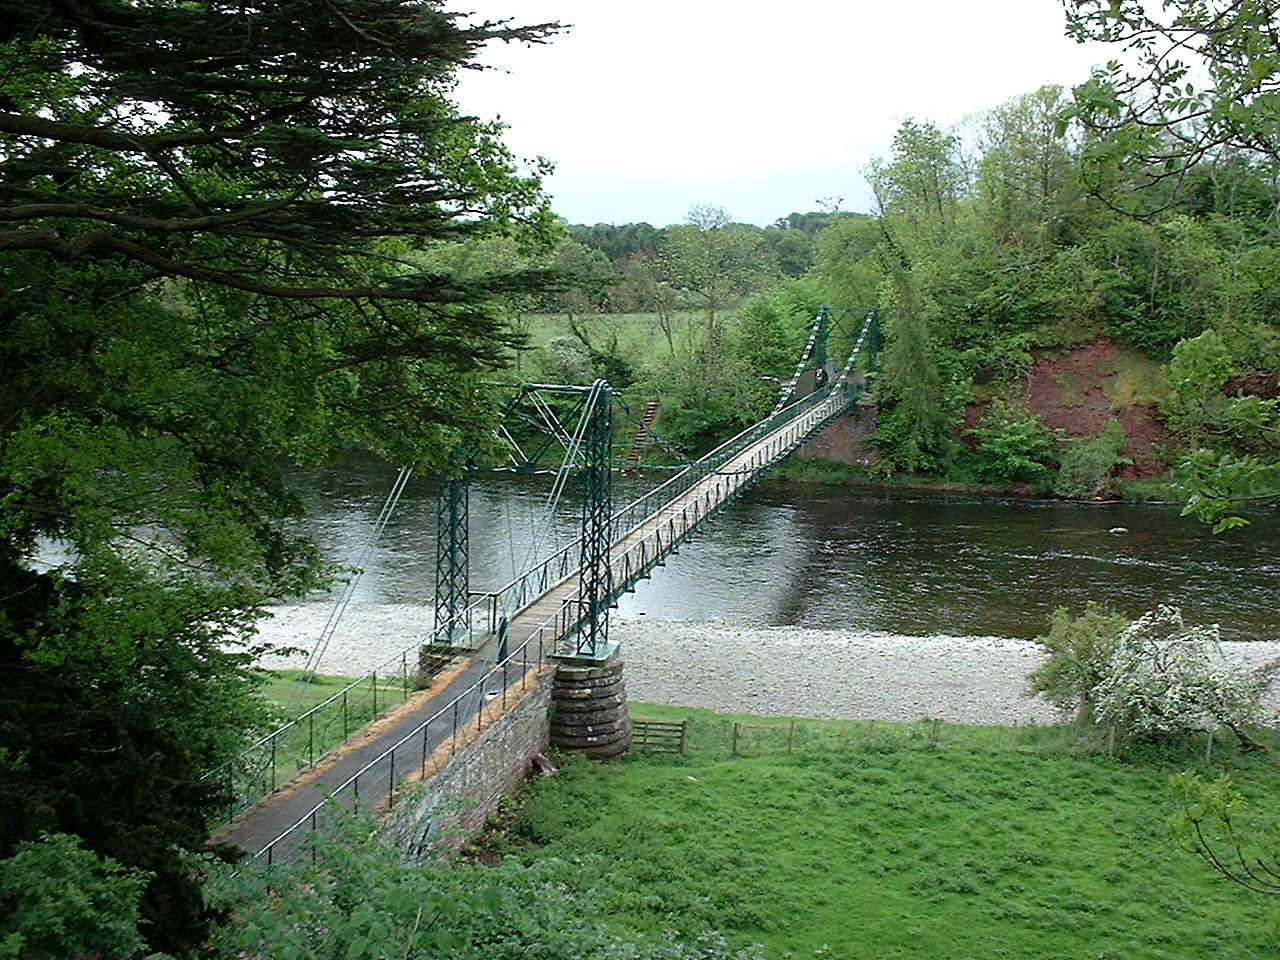 Merion House Suspension footbridge over River Tweed